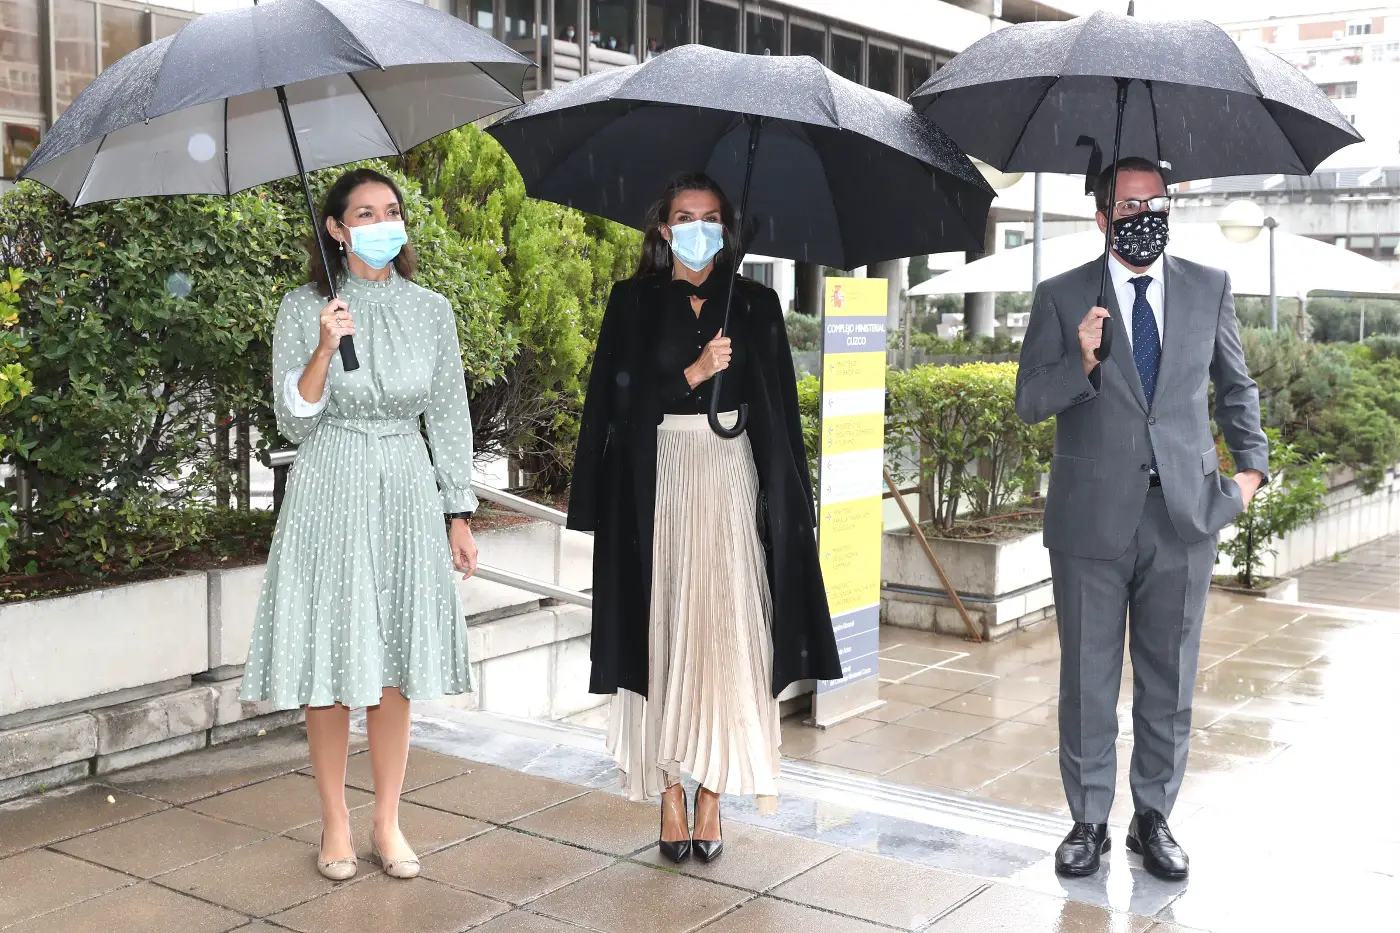 Queen Letizia of Spain wore Carolina Herrera coat and Massimo Dutti skirt for National Fashion Awards 2020